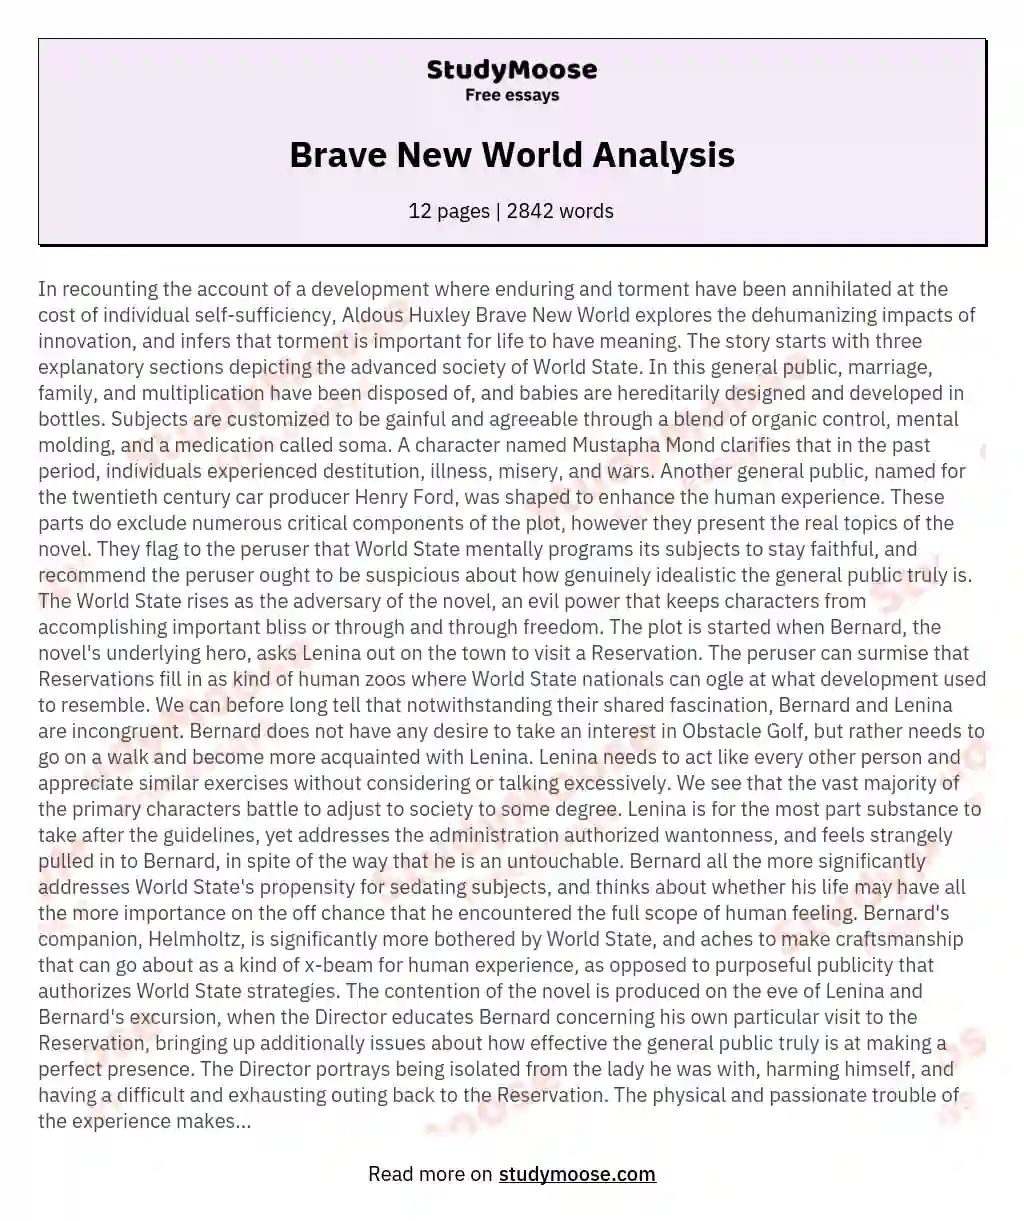 Brave New World Analysis essay